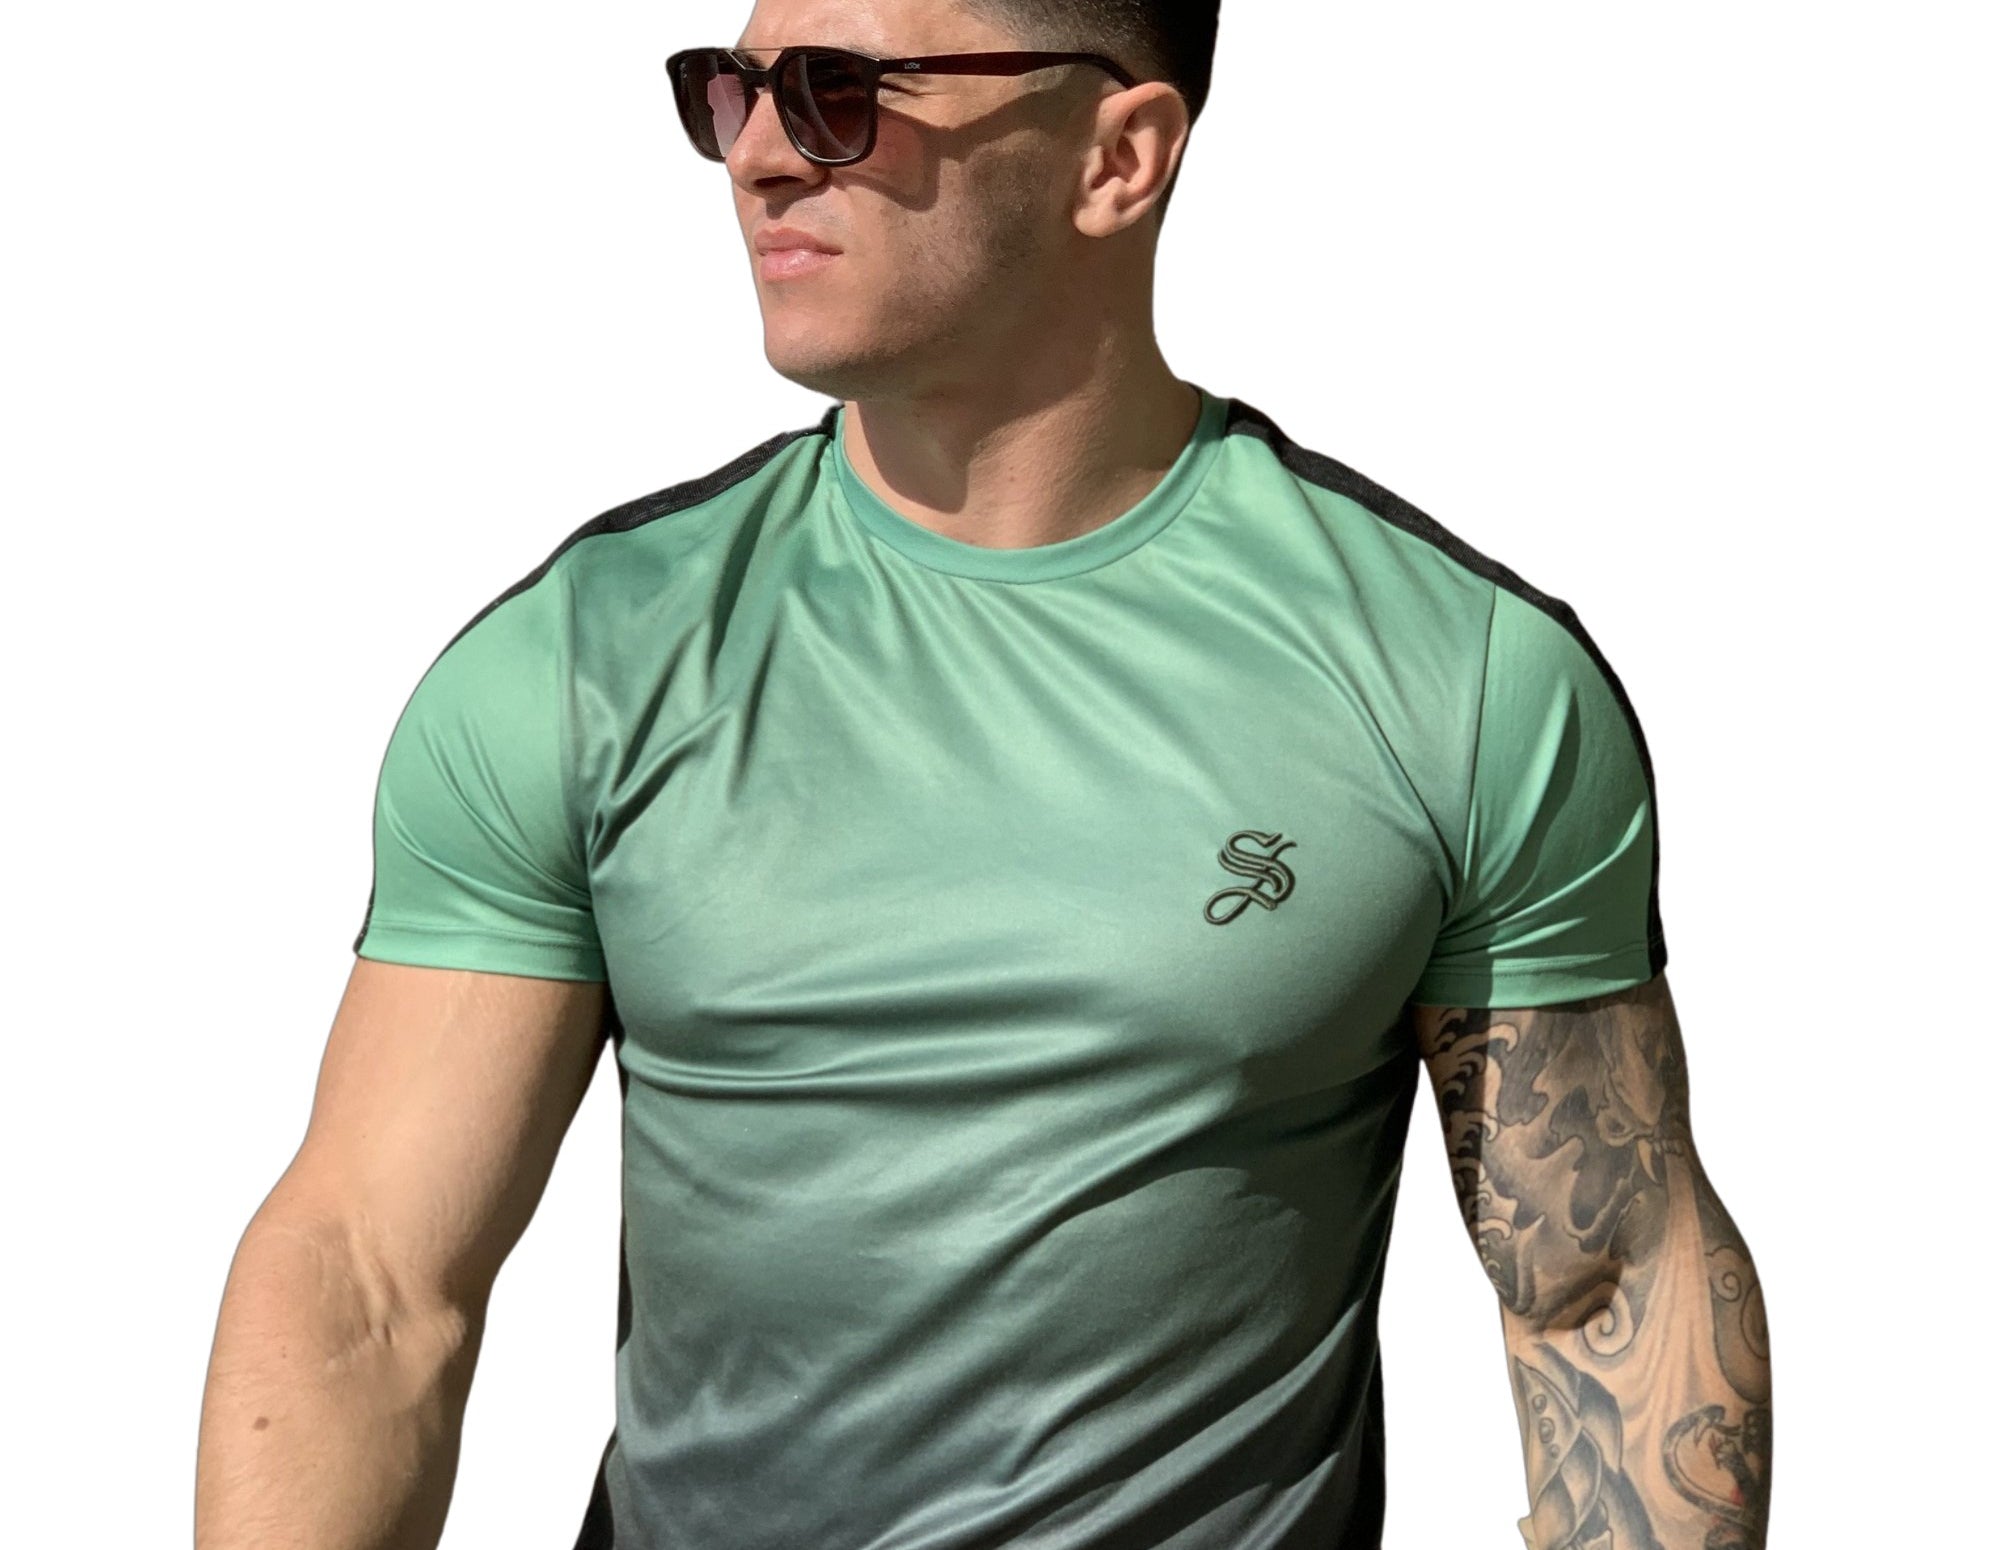 Lizard - Khaki Green/Black T-shirt for Men - Sarman Fashion - Wholesale Clothing Fashion Brand for Men from Canada